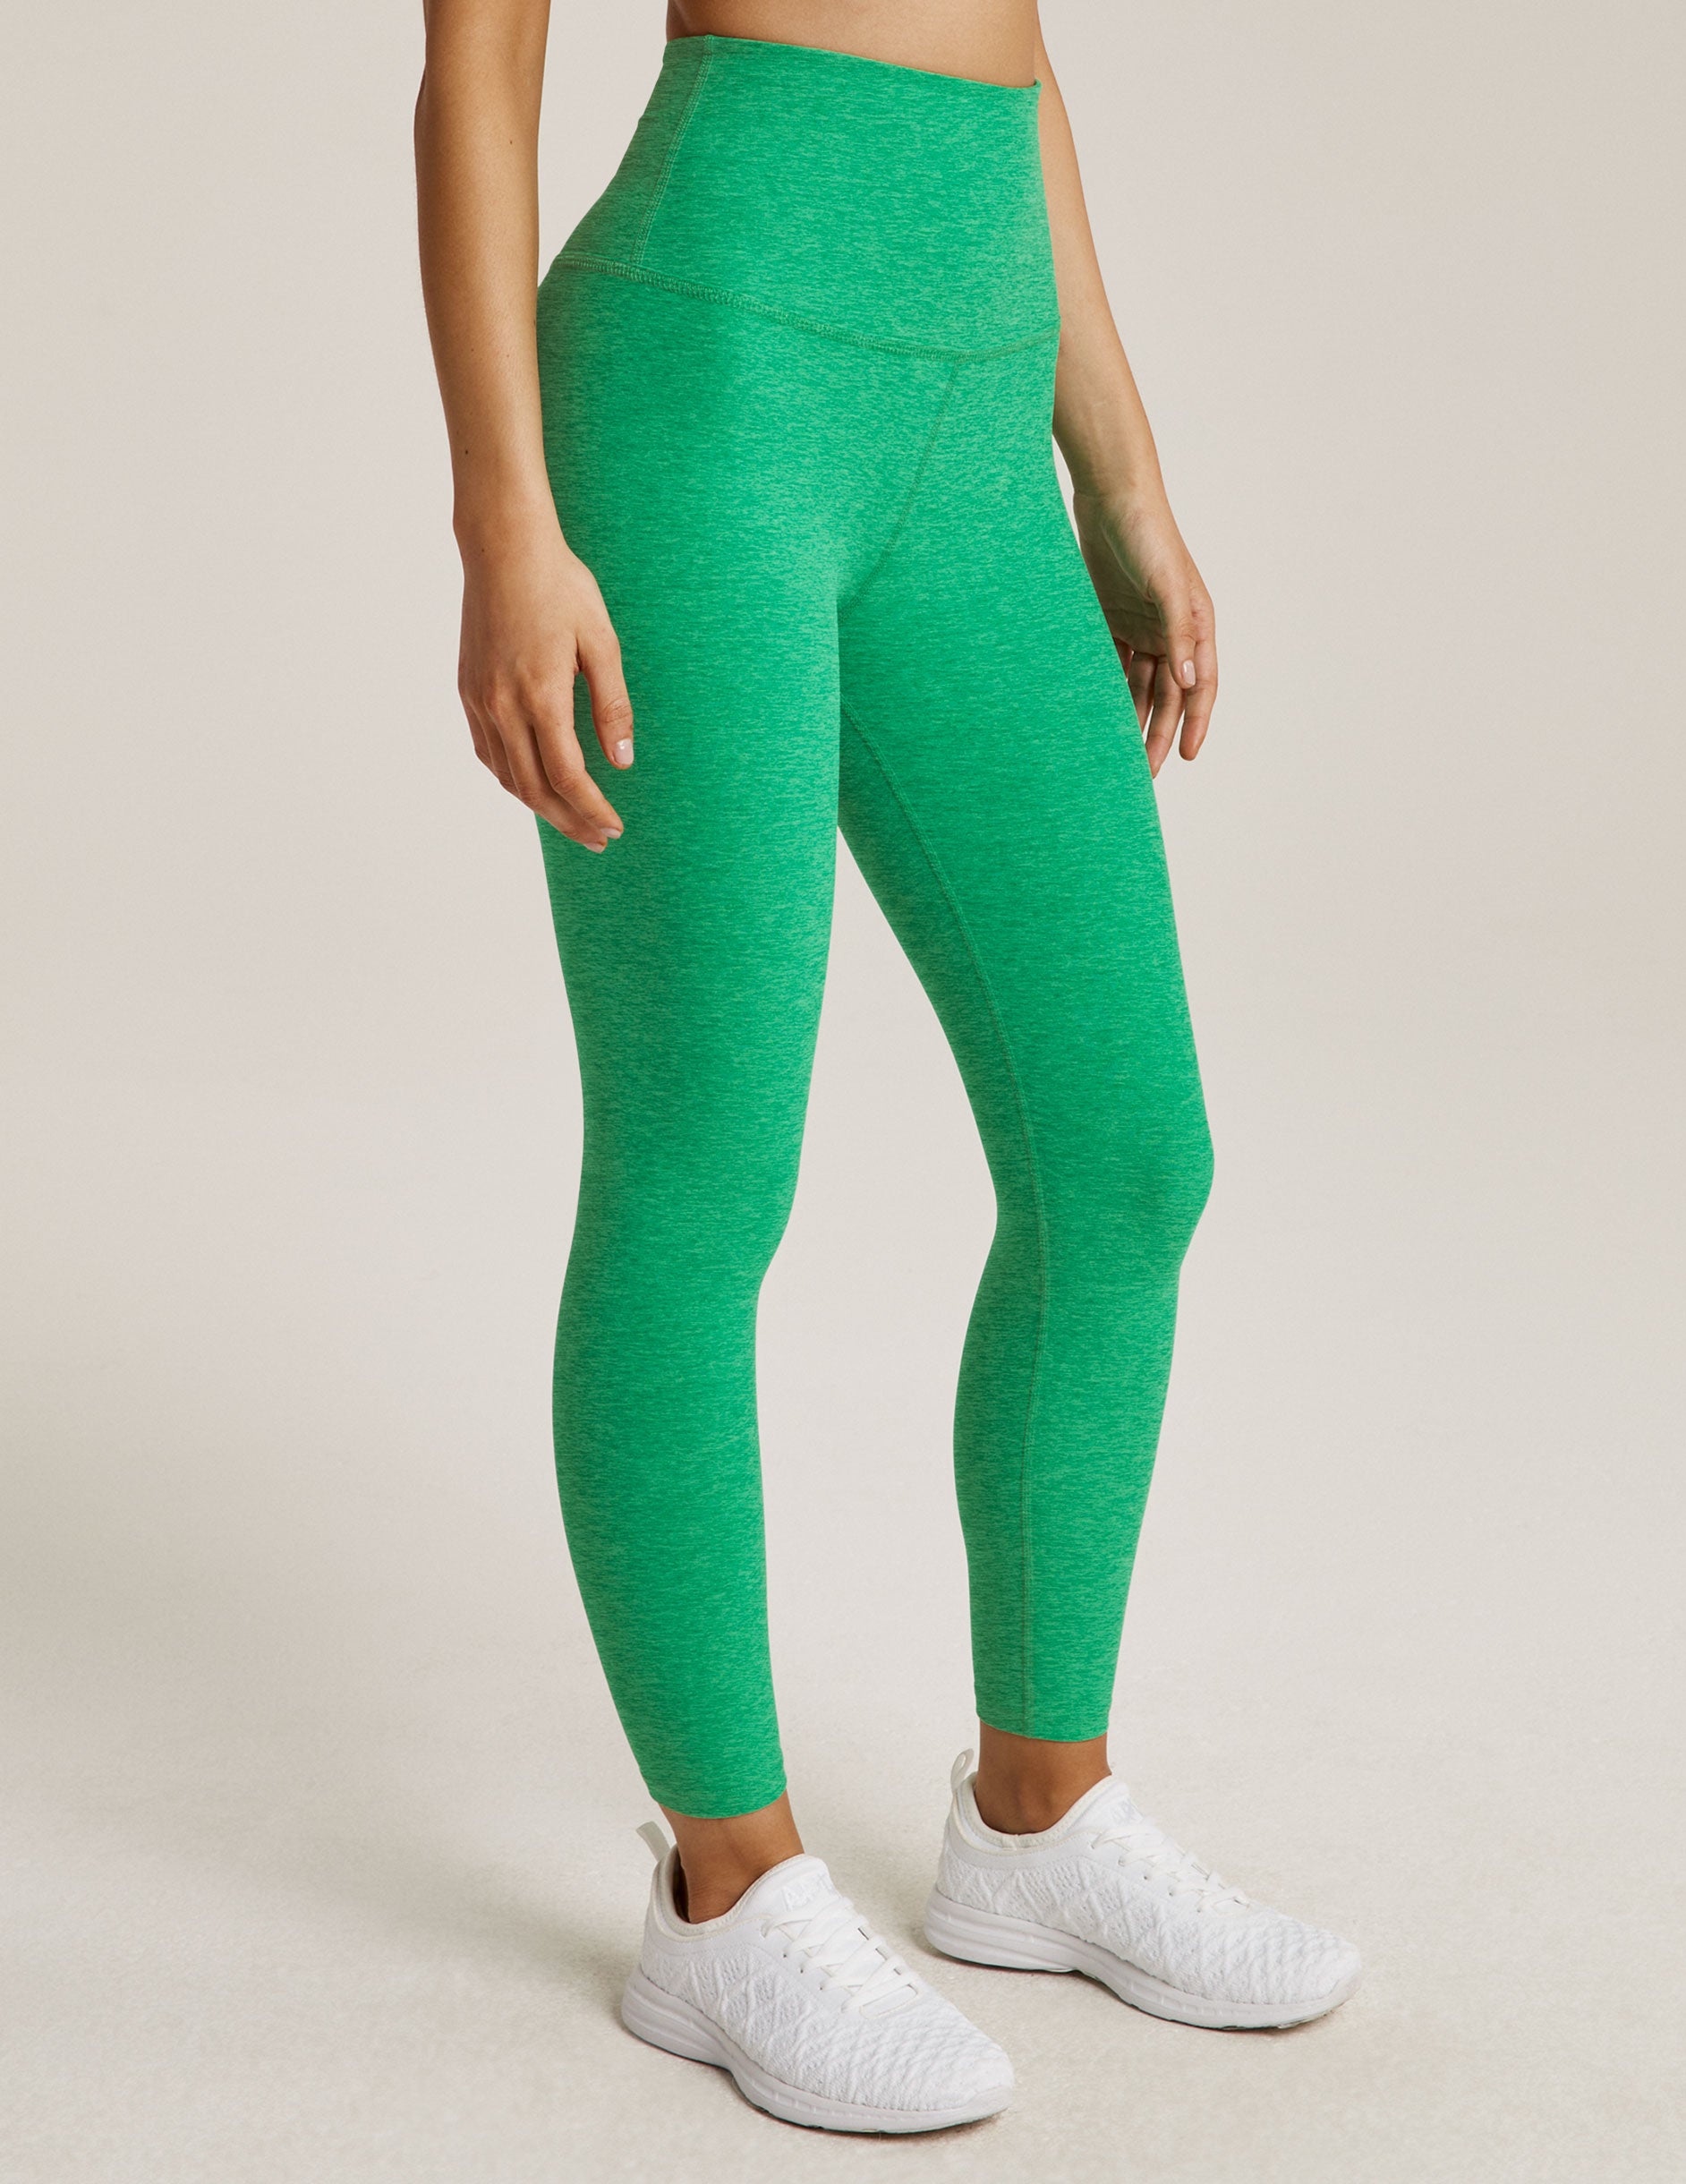 beyond yoga green leggings